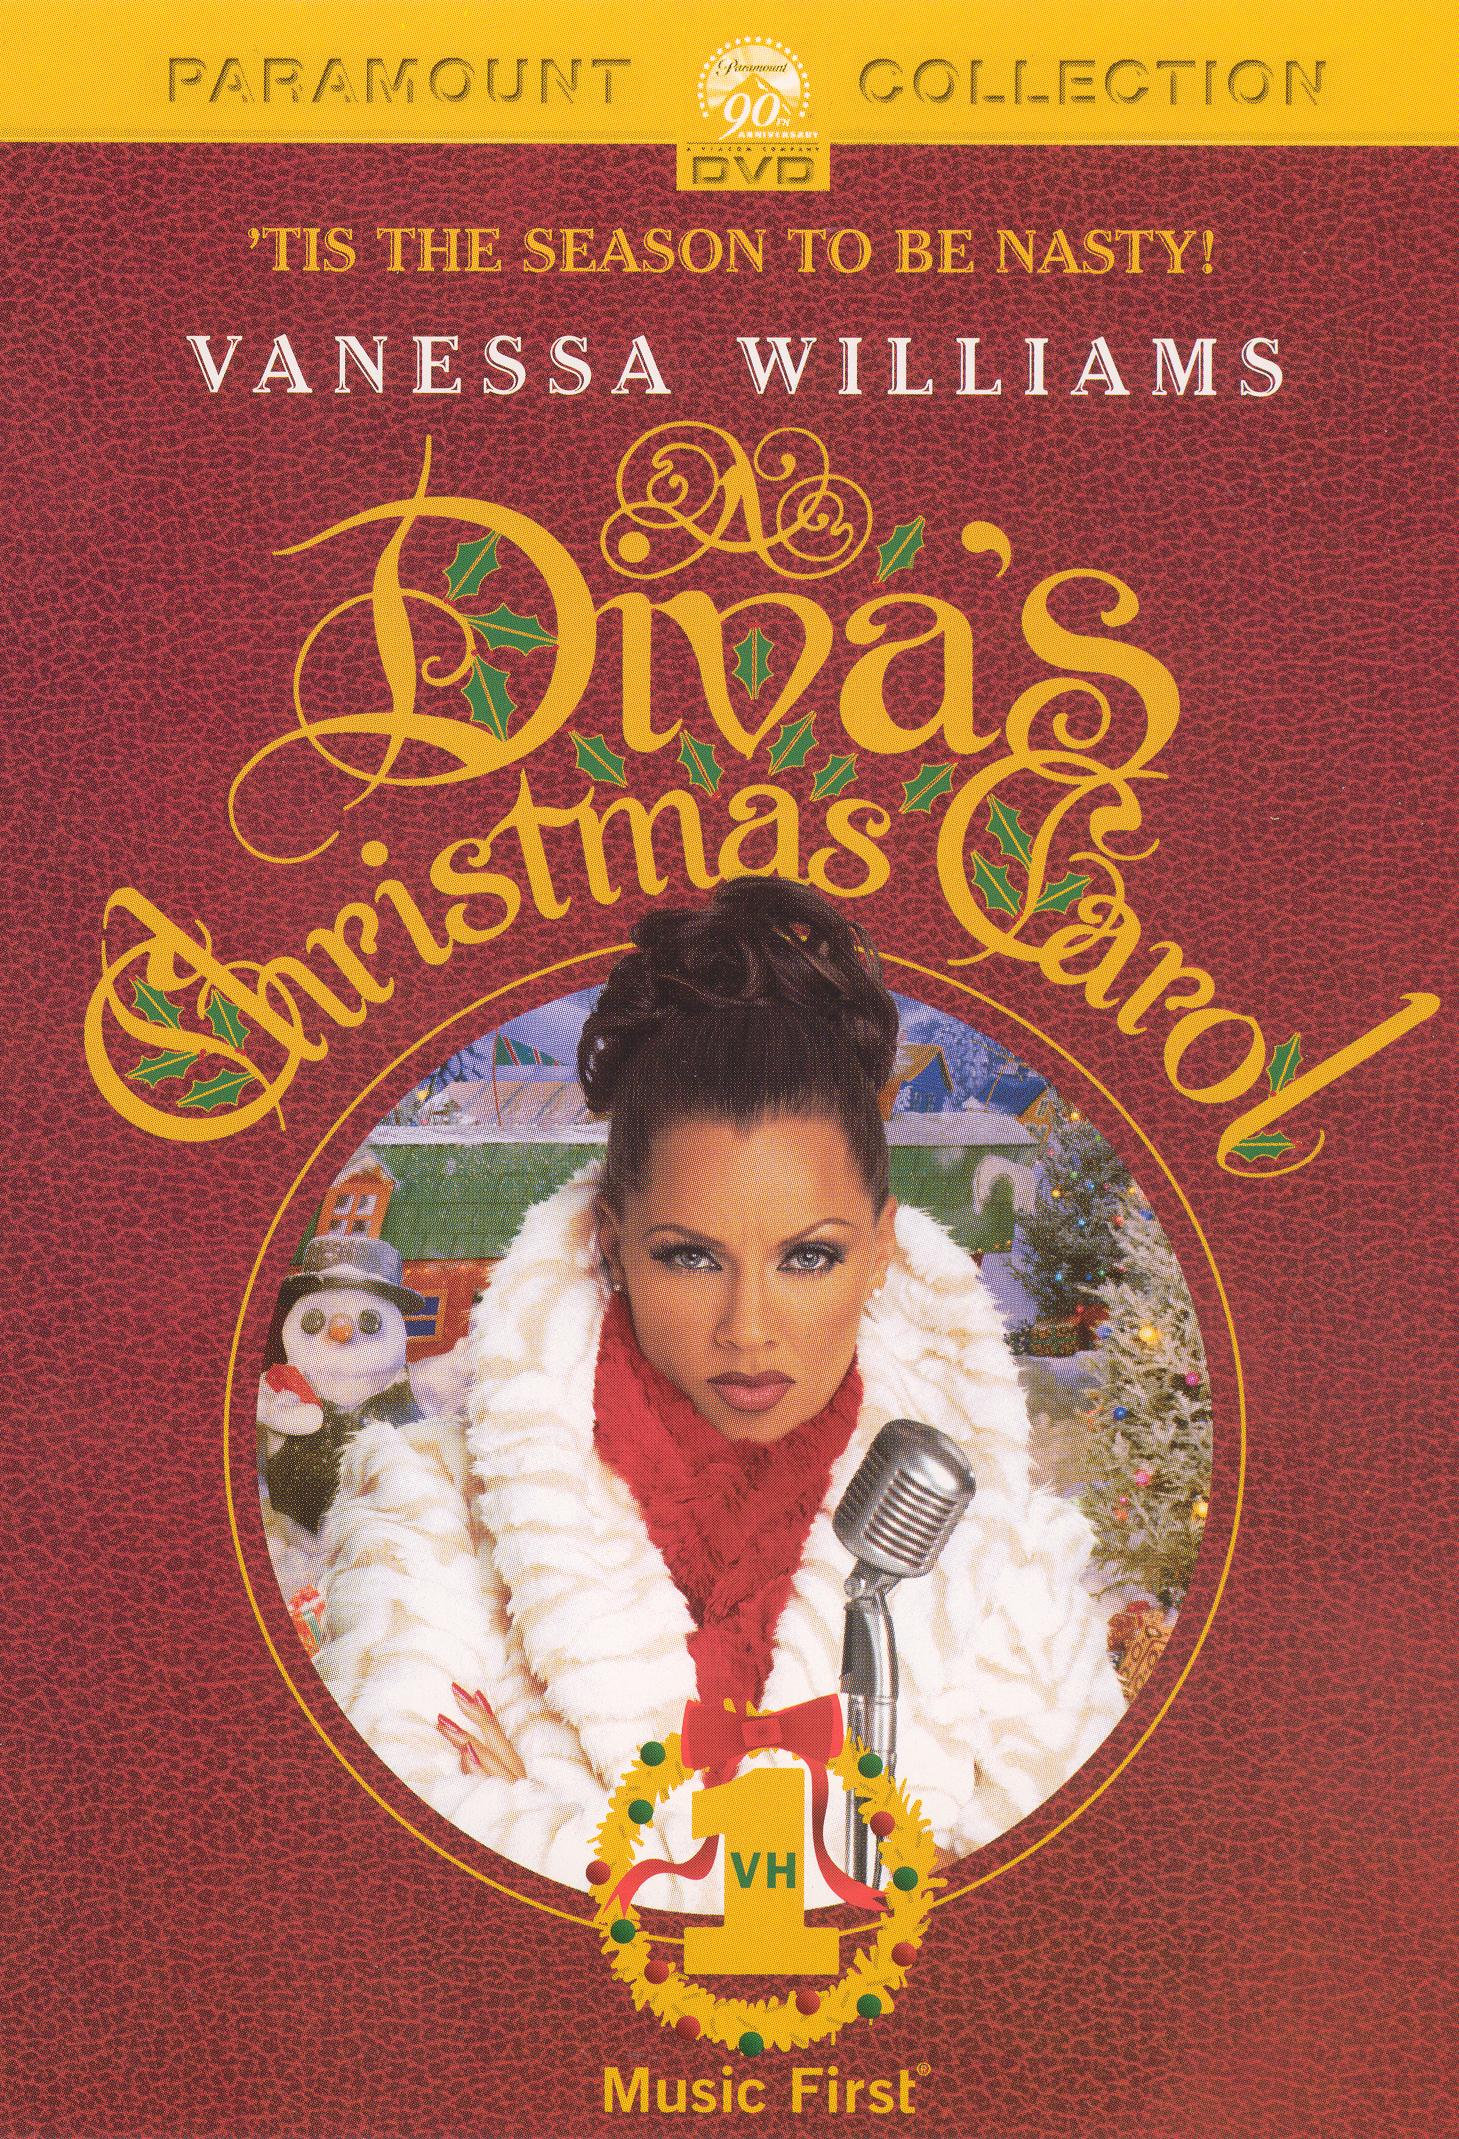 Diva's Christmas Carol cover art